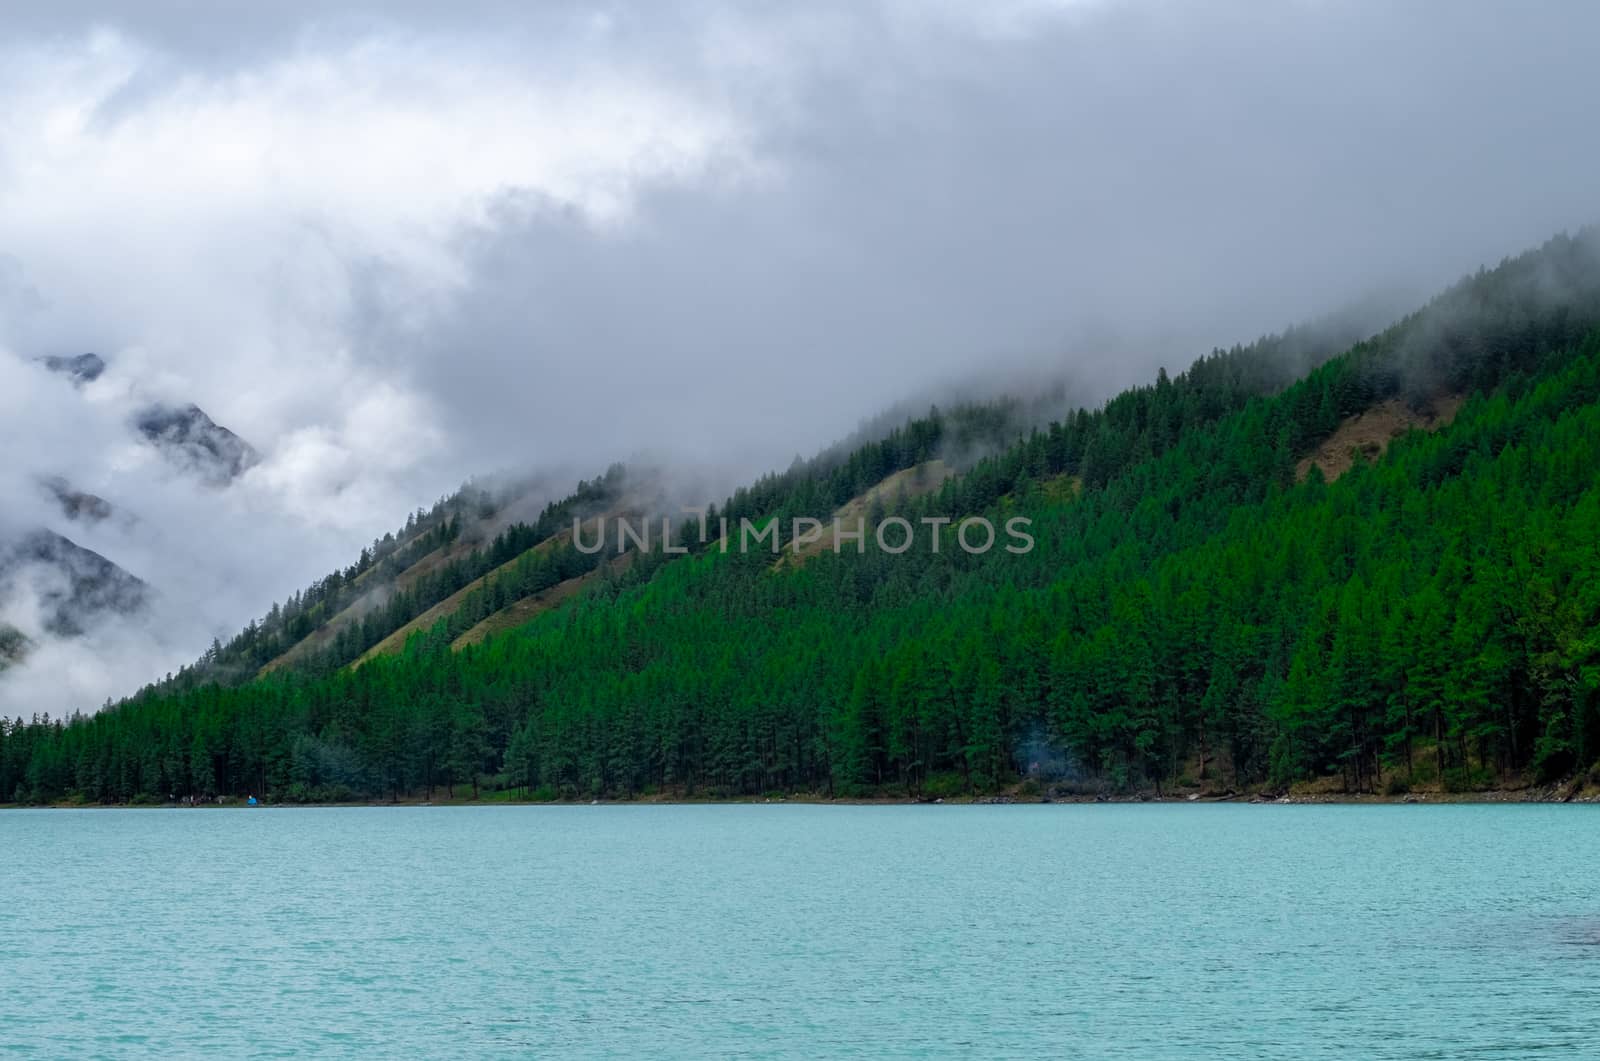 Shavlinskoye lake in the Altai Republic on the background of mountain peaks shrouded in fog.